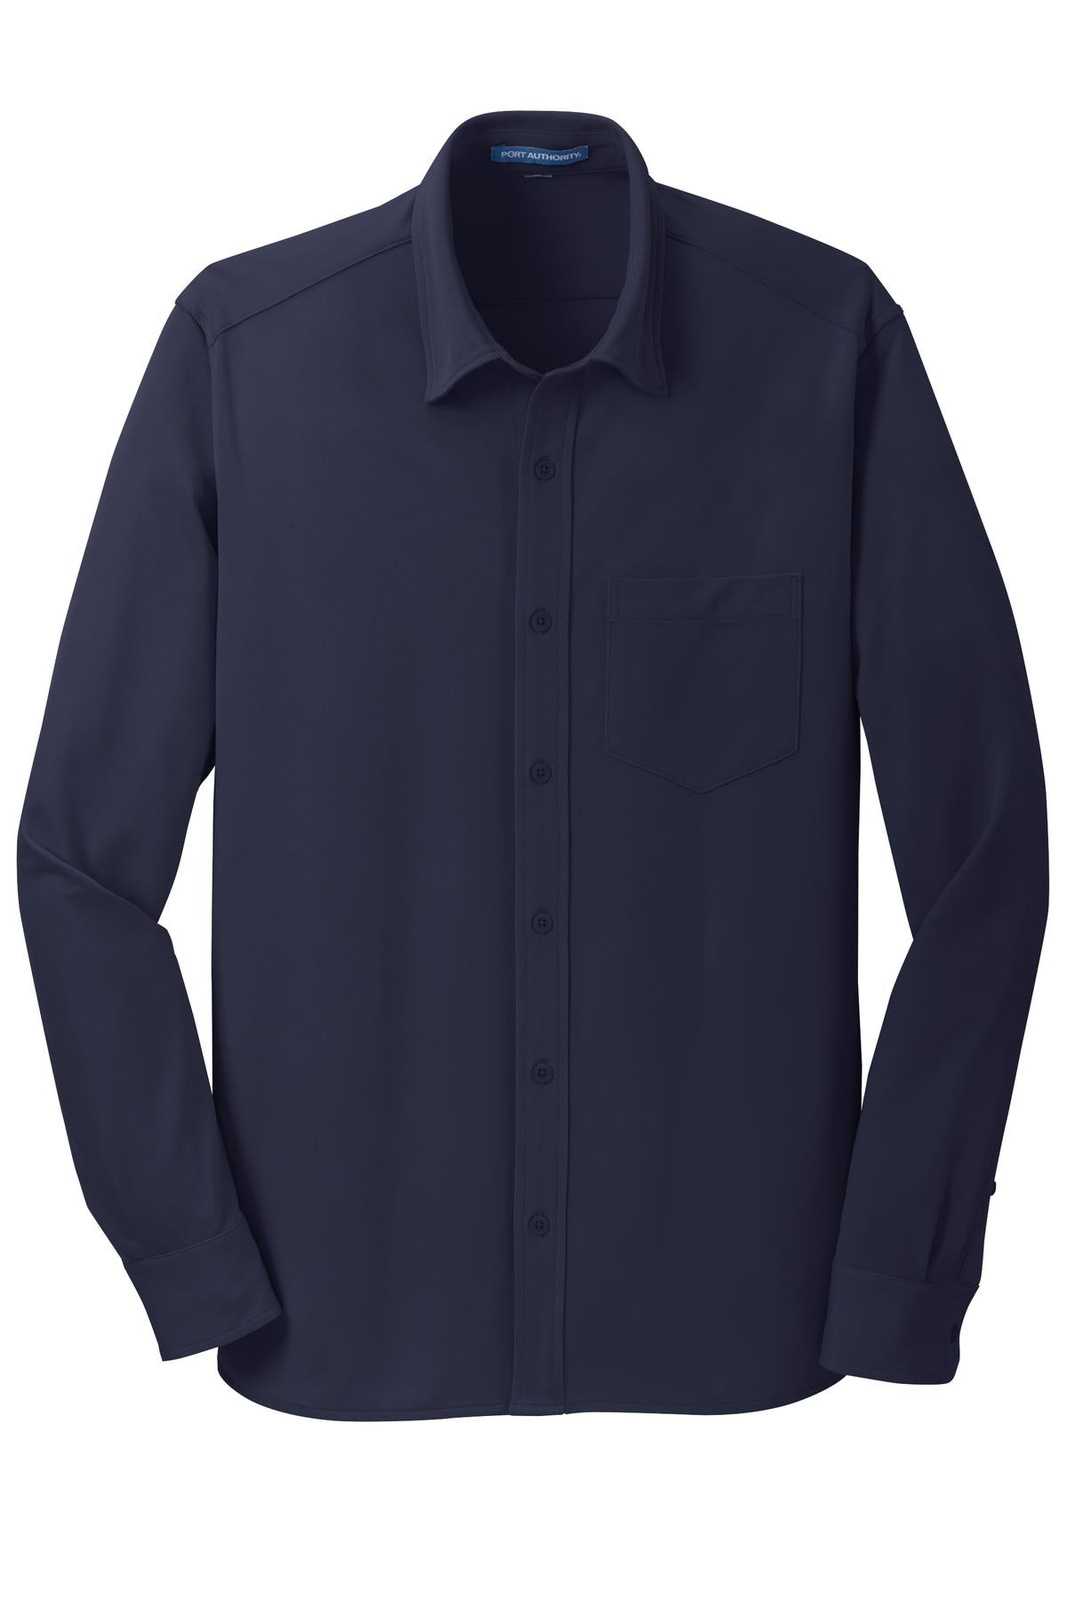 Port Authority K570 Dimension Knit Dress Shirt - Dark Navy - HIT a Double - 5